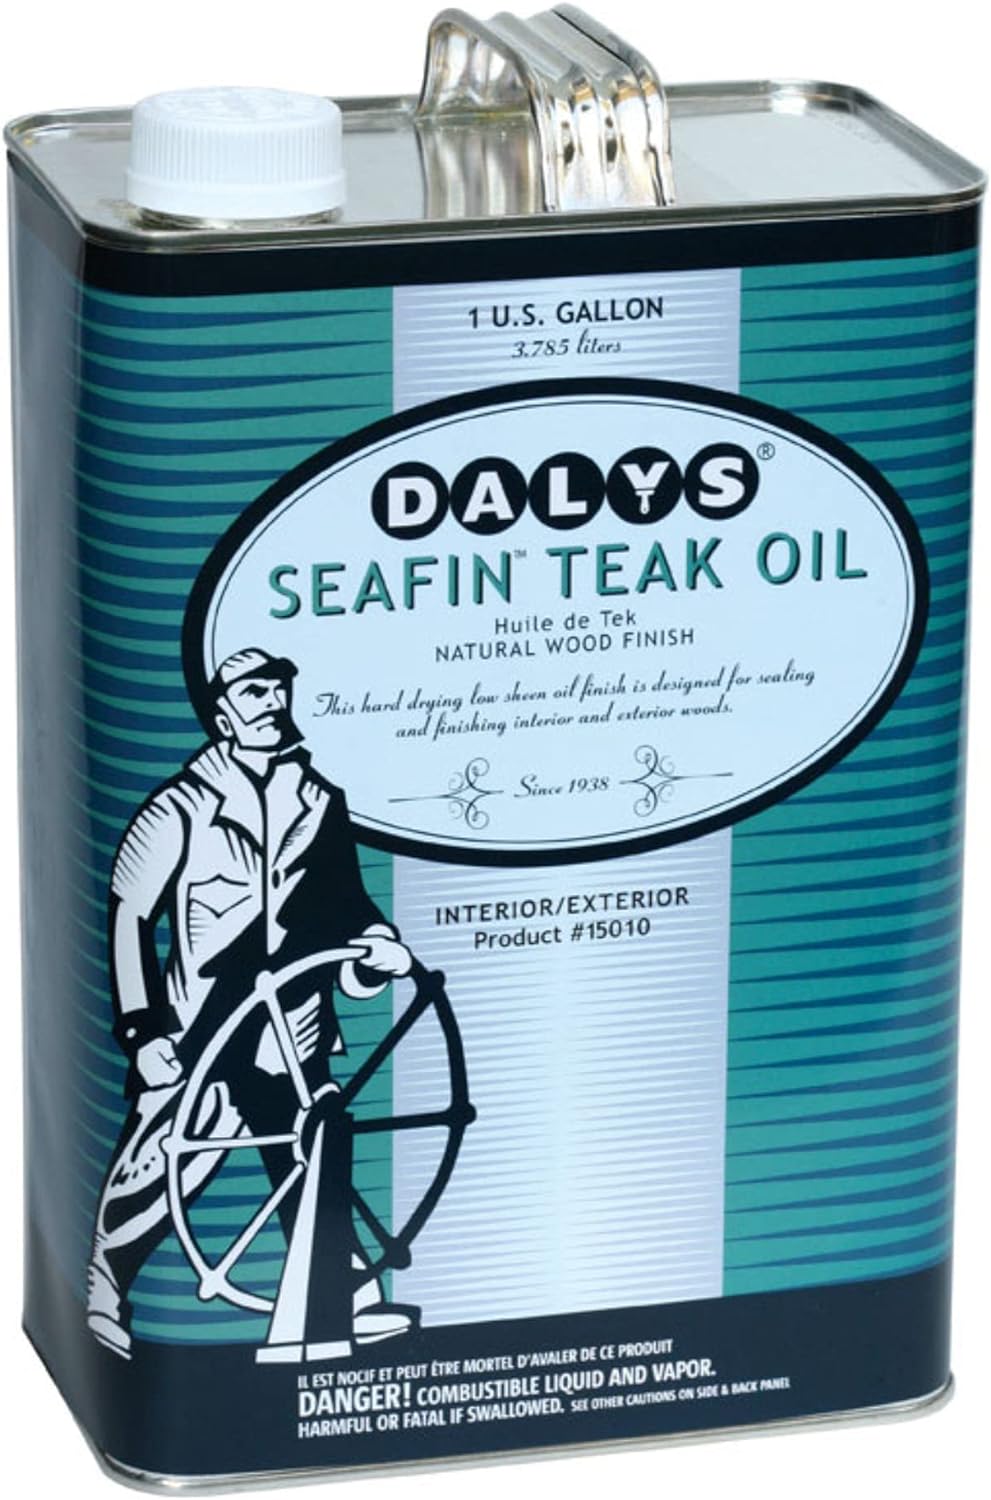 Farwest Paint Mfg. Co. DALY'S WOOD FINISHING PRODUCTS Seafin Teak Oil, 1 Quart, Clear, Quart